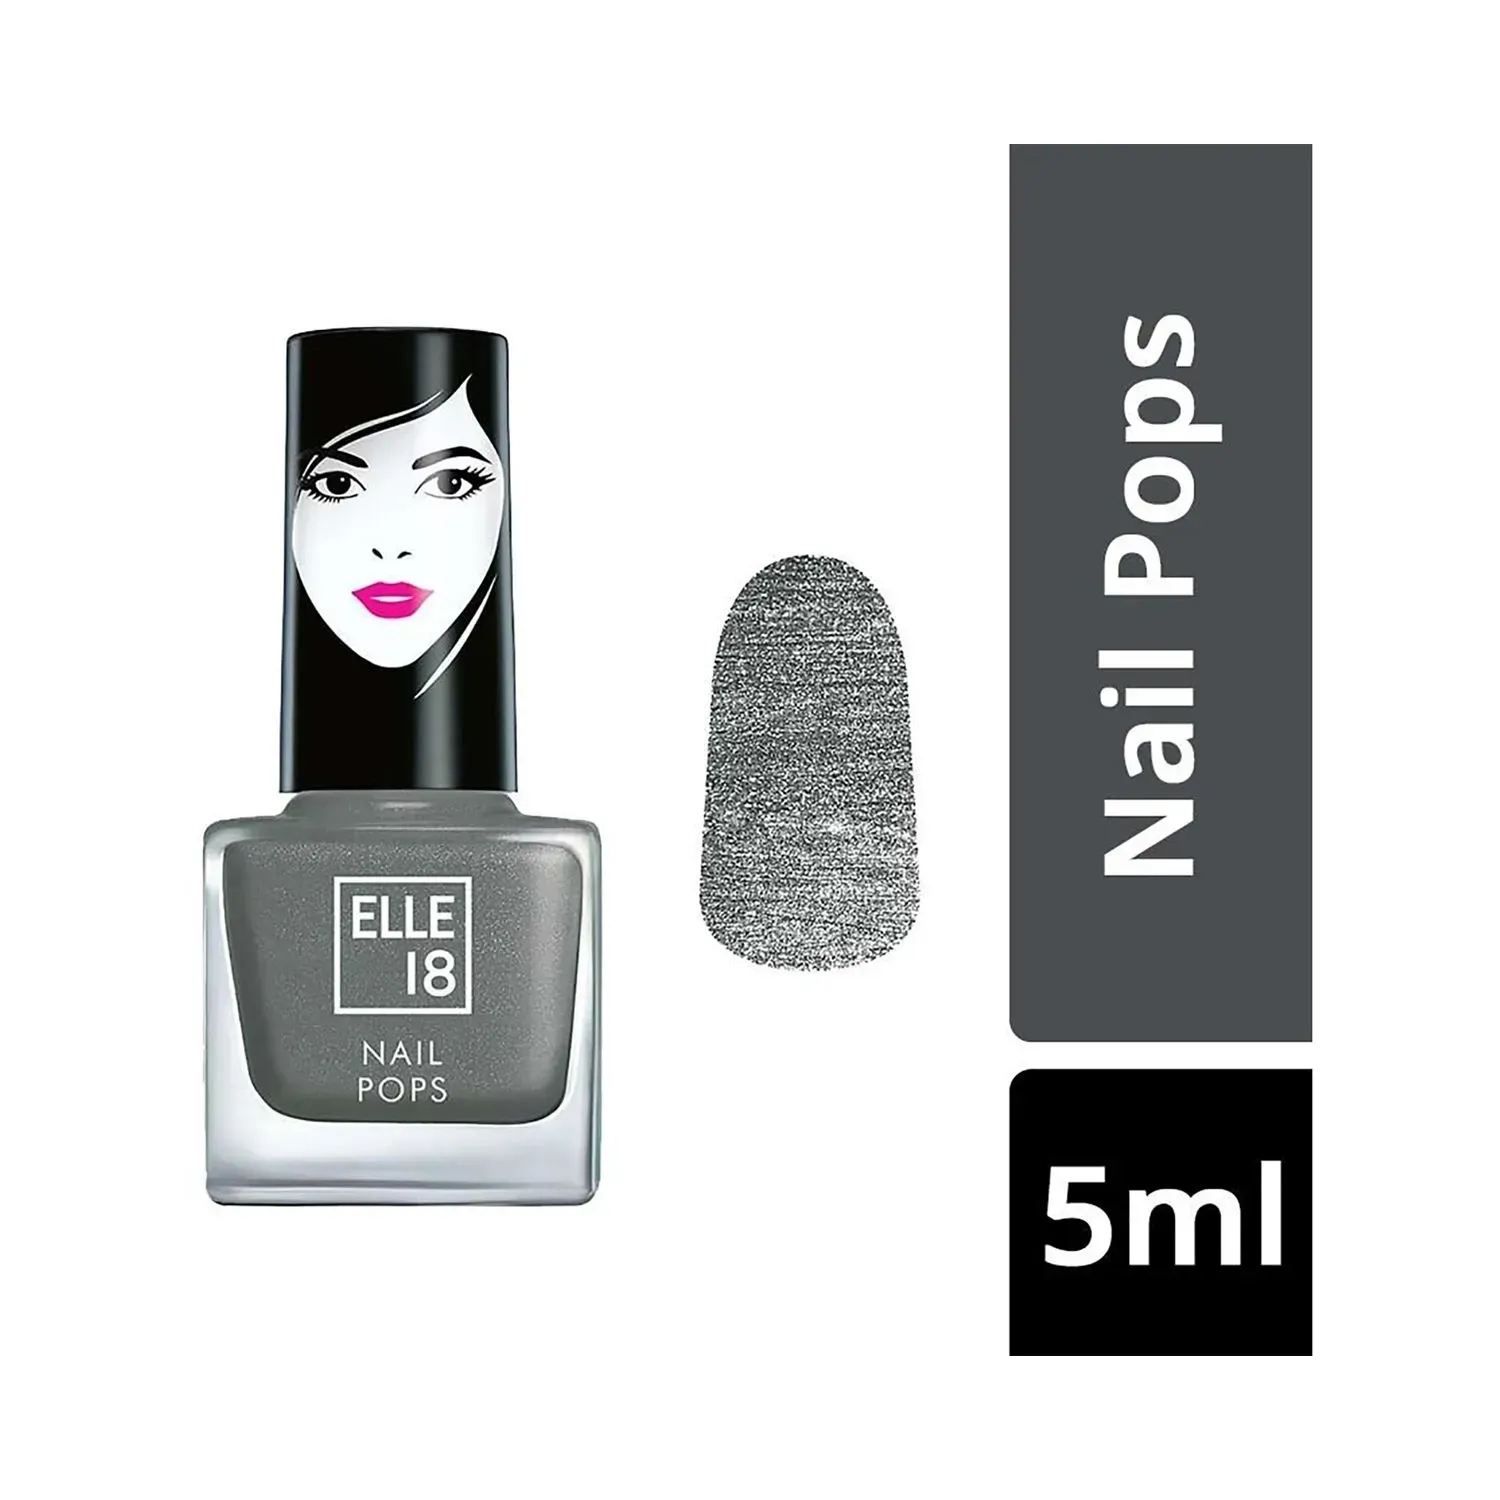 Elle 18 Nail Pops Nail Polish | Review + Nail Swatches | 8 shades |  crazyaboutcolors - YouTube